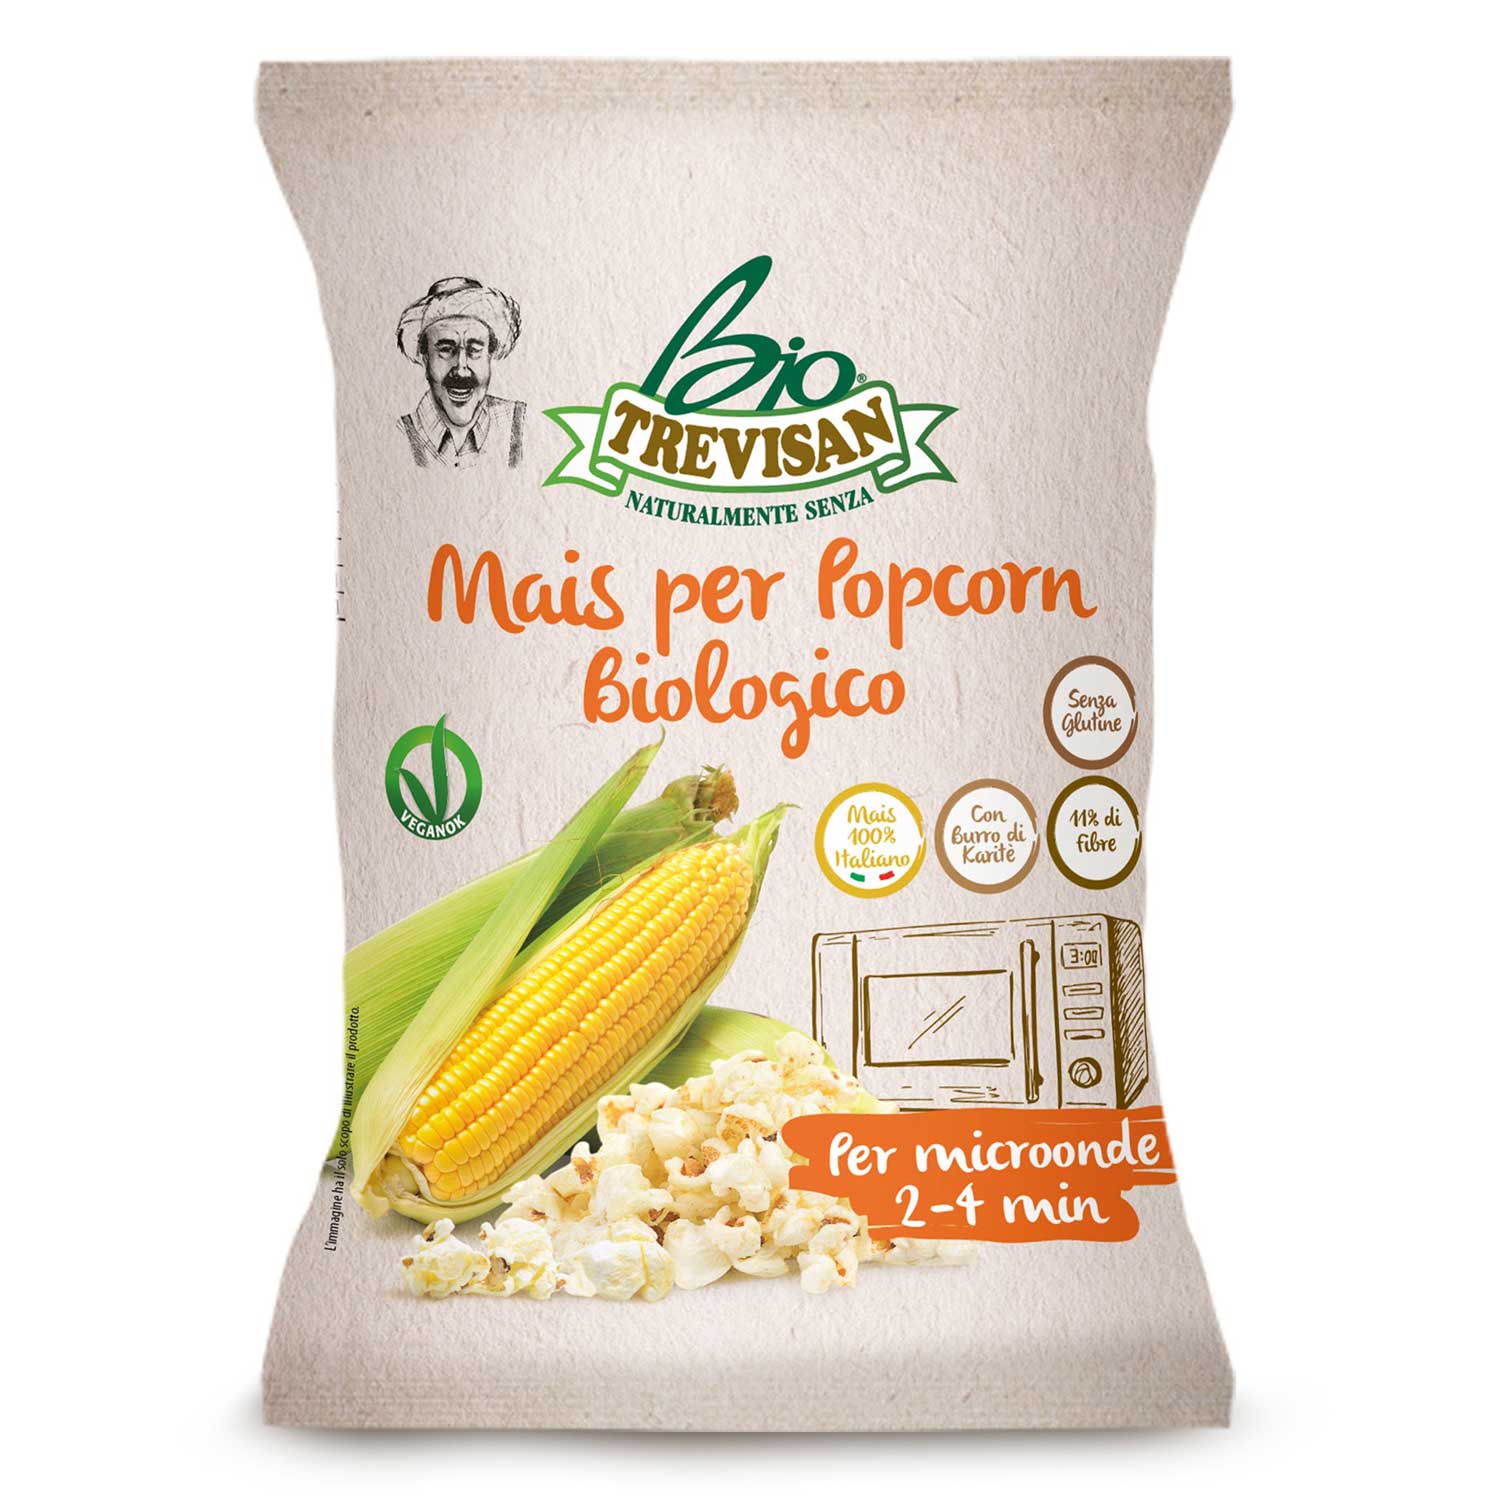 Selex Pop Corn Salato per Microonde 3 buste 270 g